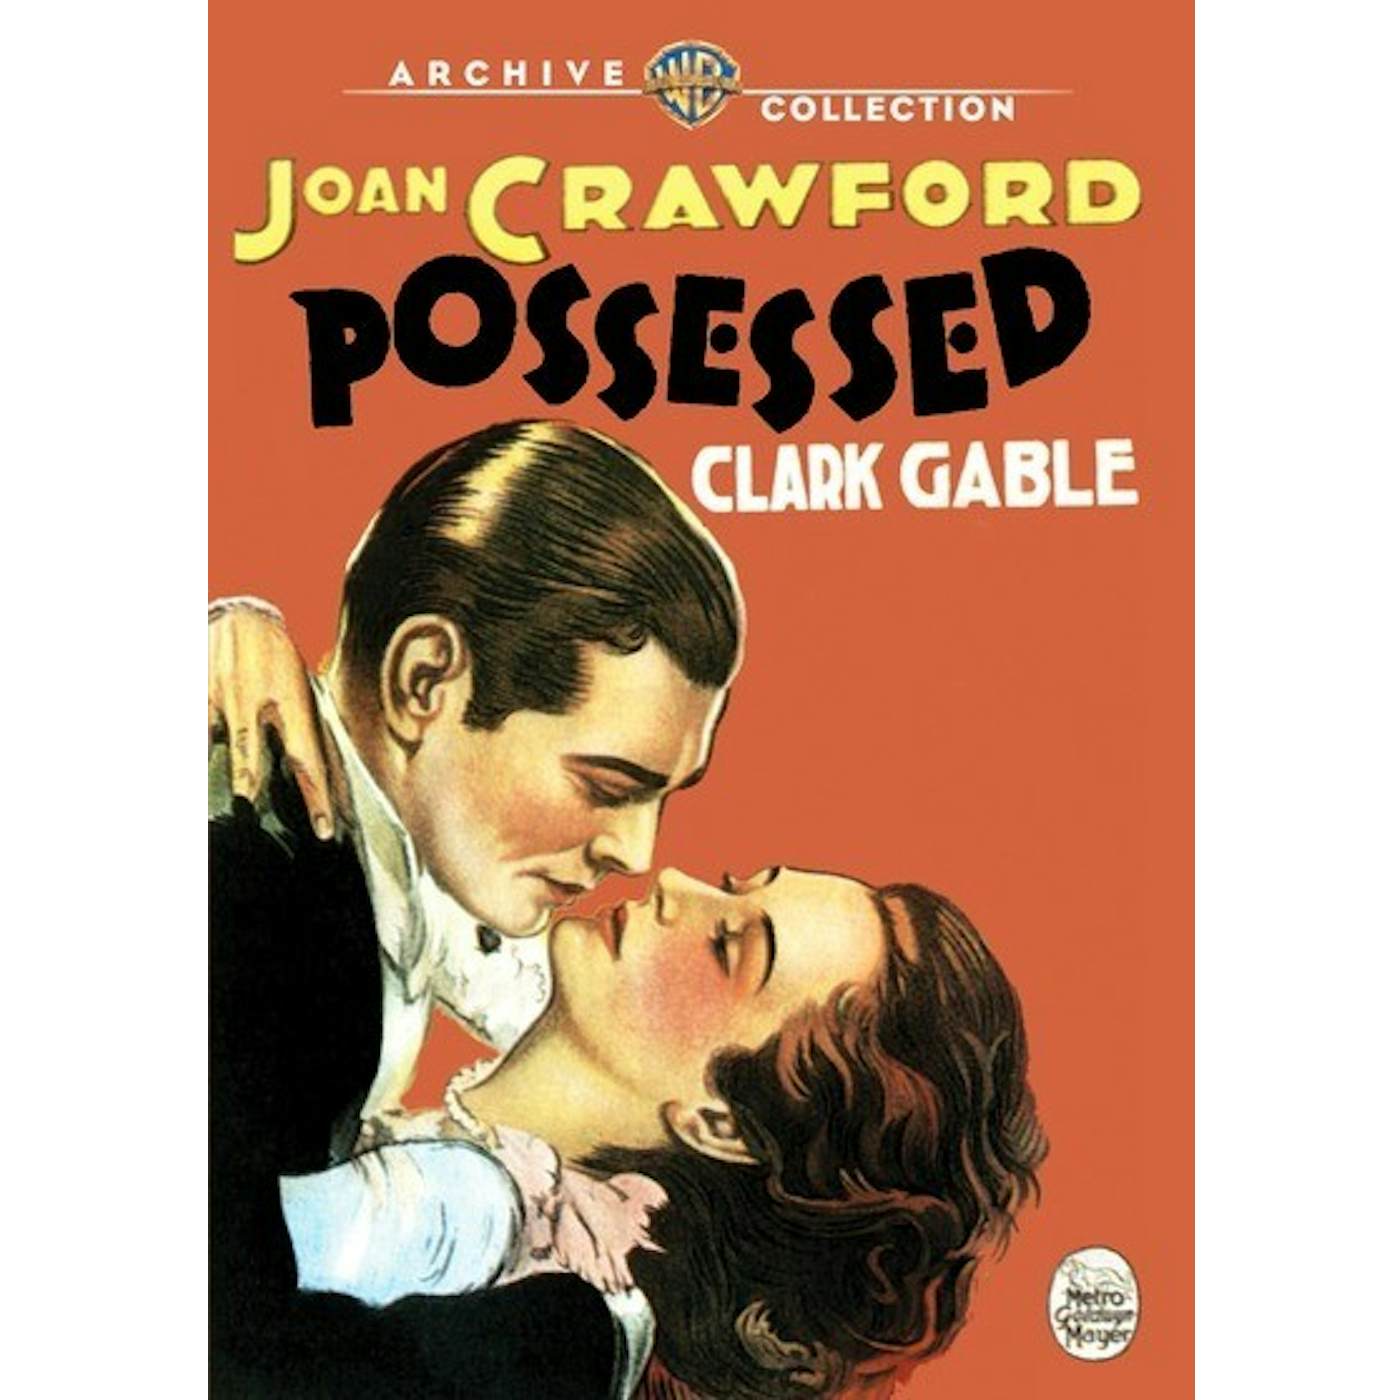 POSSESSED (1931) DVD